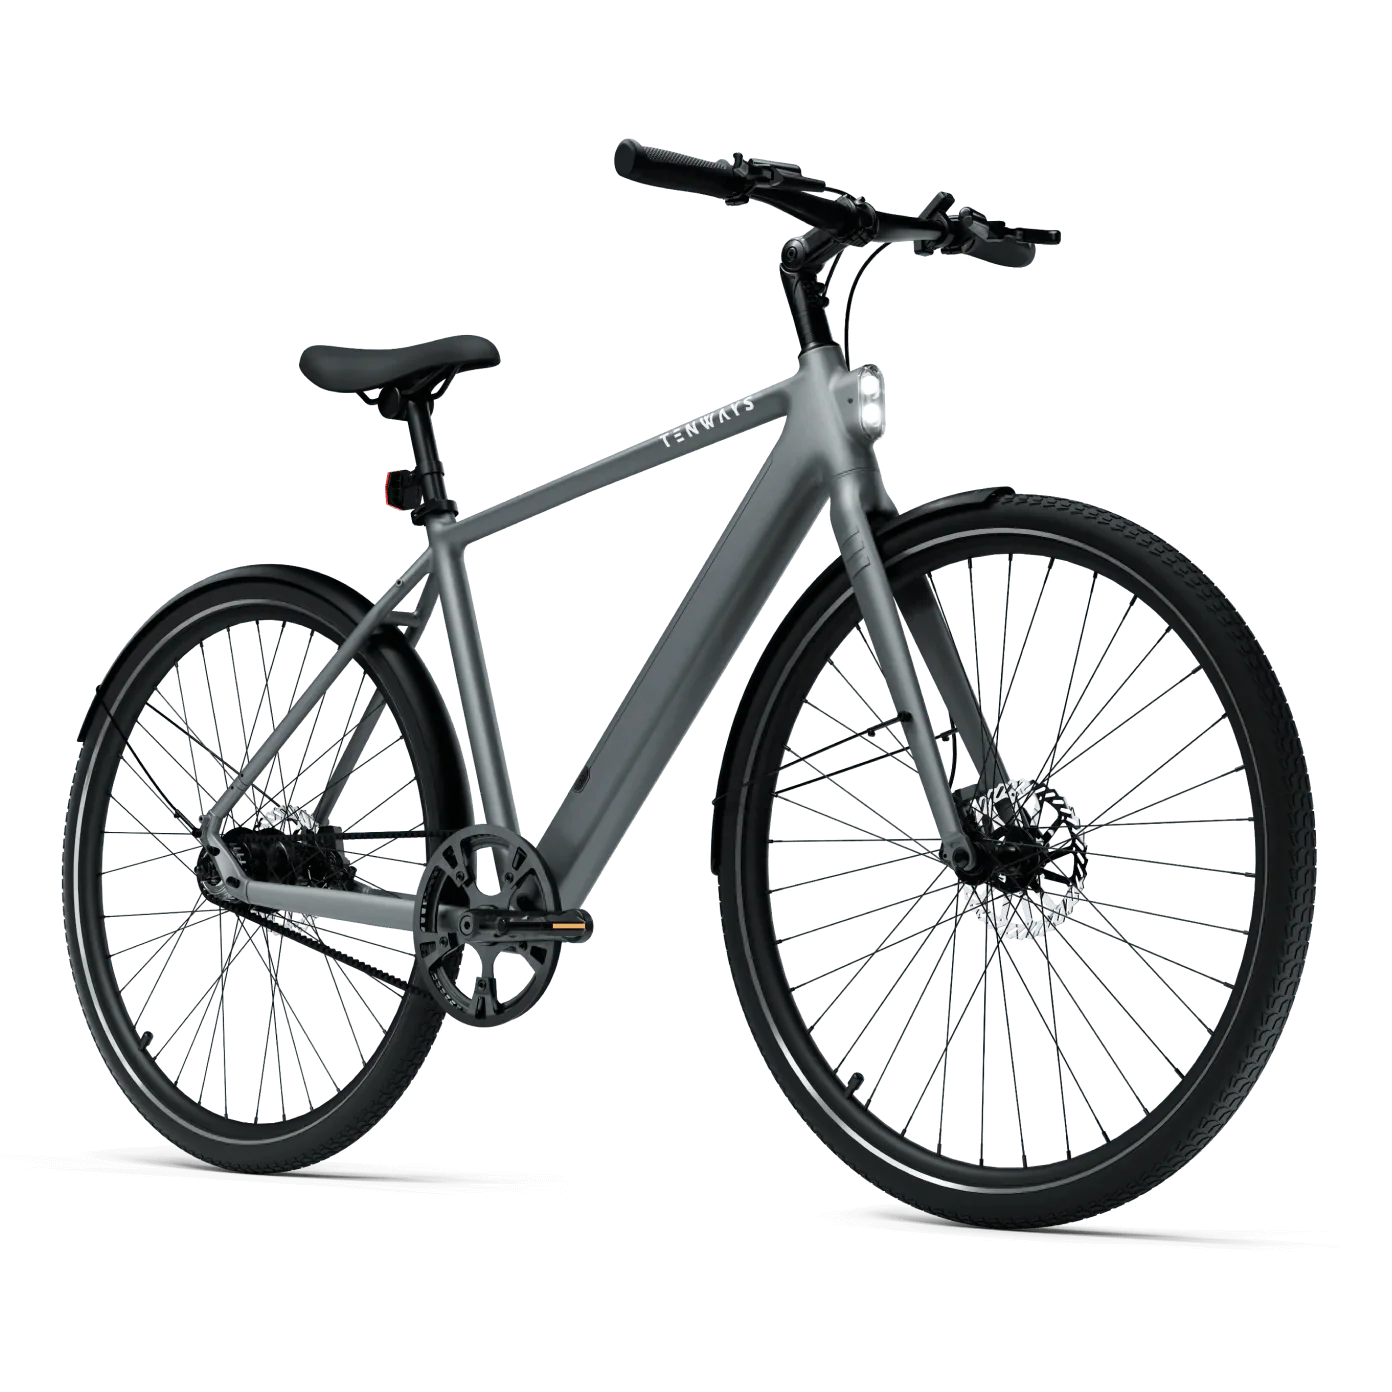 TENWAYS CGO600 PRO Electric Bike Cycle Scheme Pricing